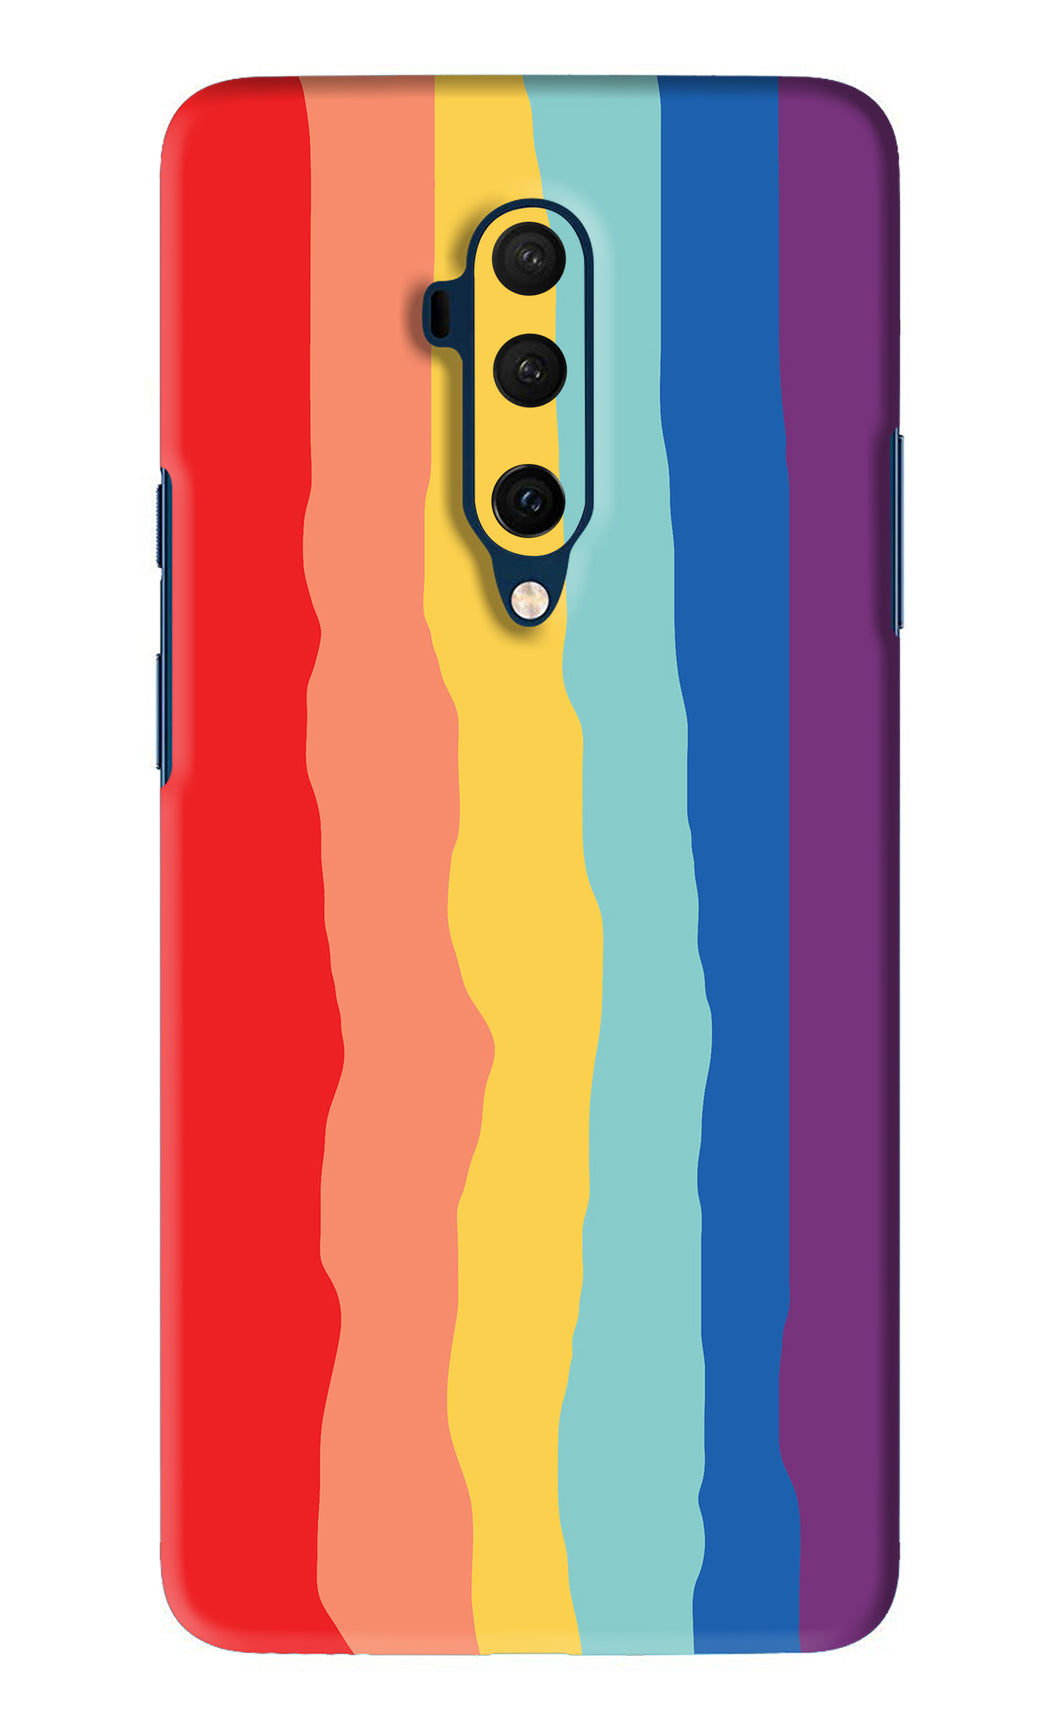 Rainbow OnePlus 7T Pro Back Skin Wrap